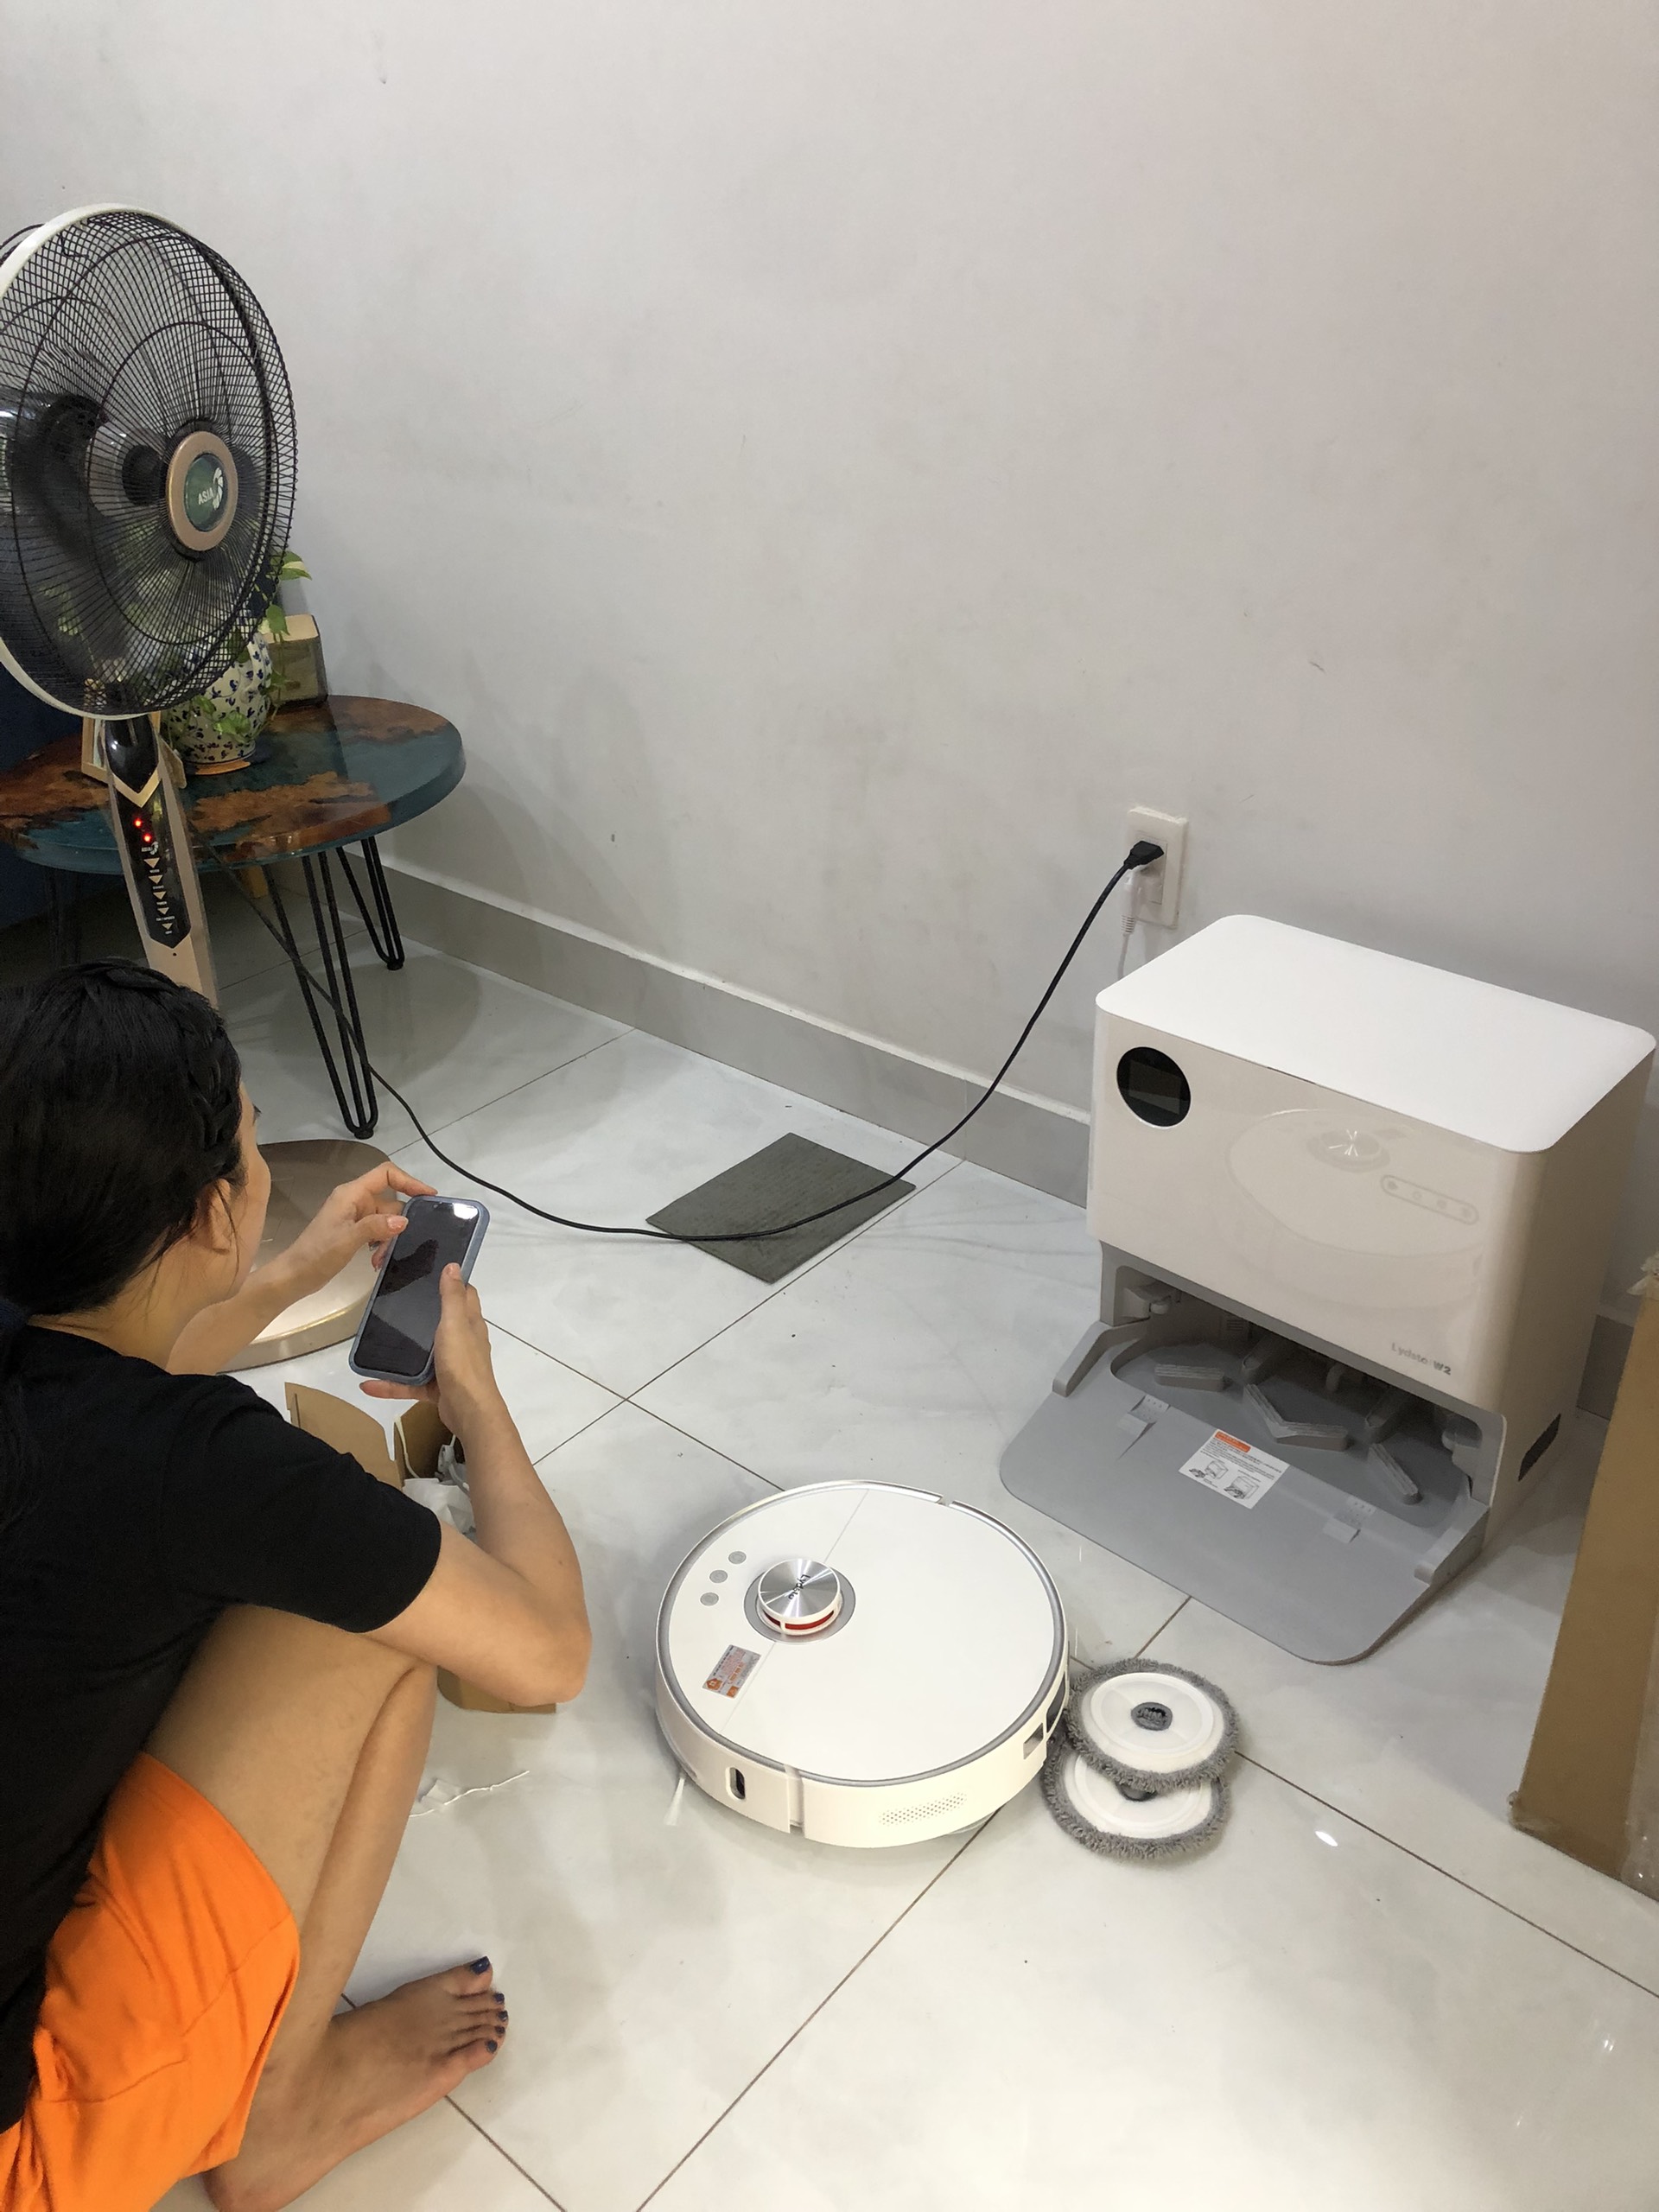 Robot hút bụi lau nhà tự giặt giẻ Xiaomi Lydsto W2